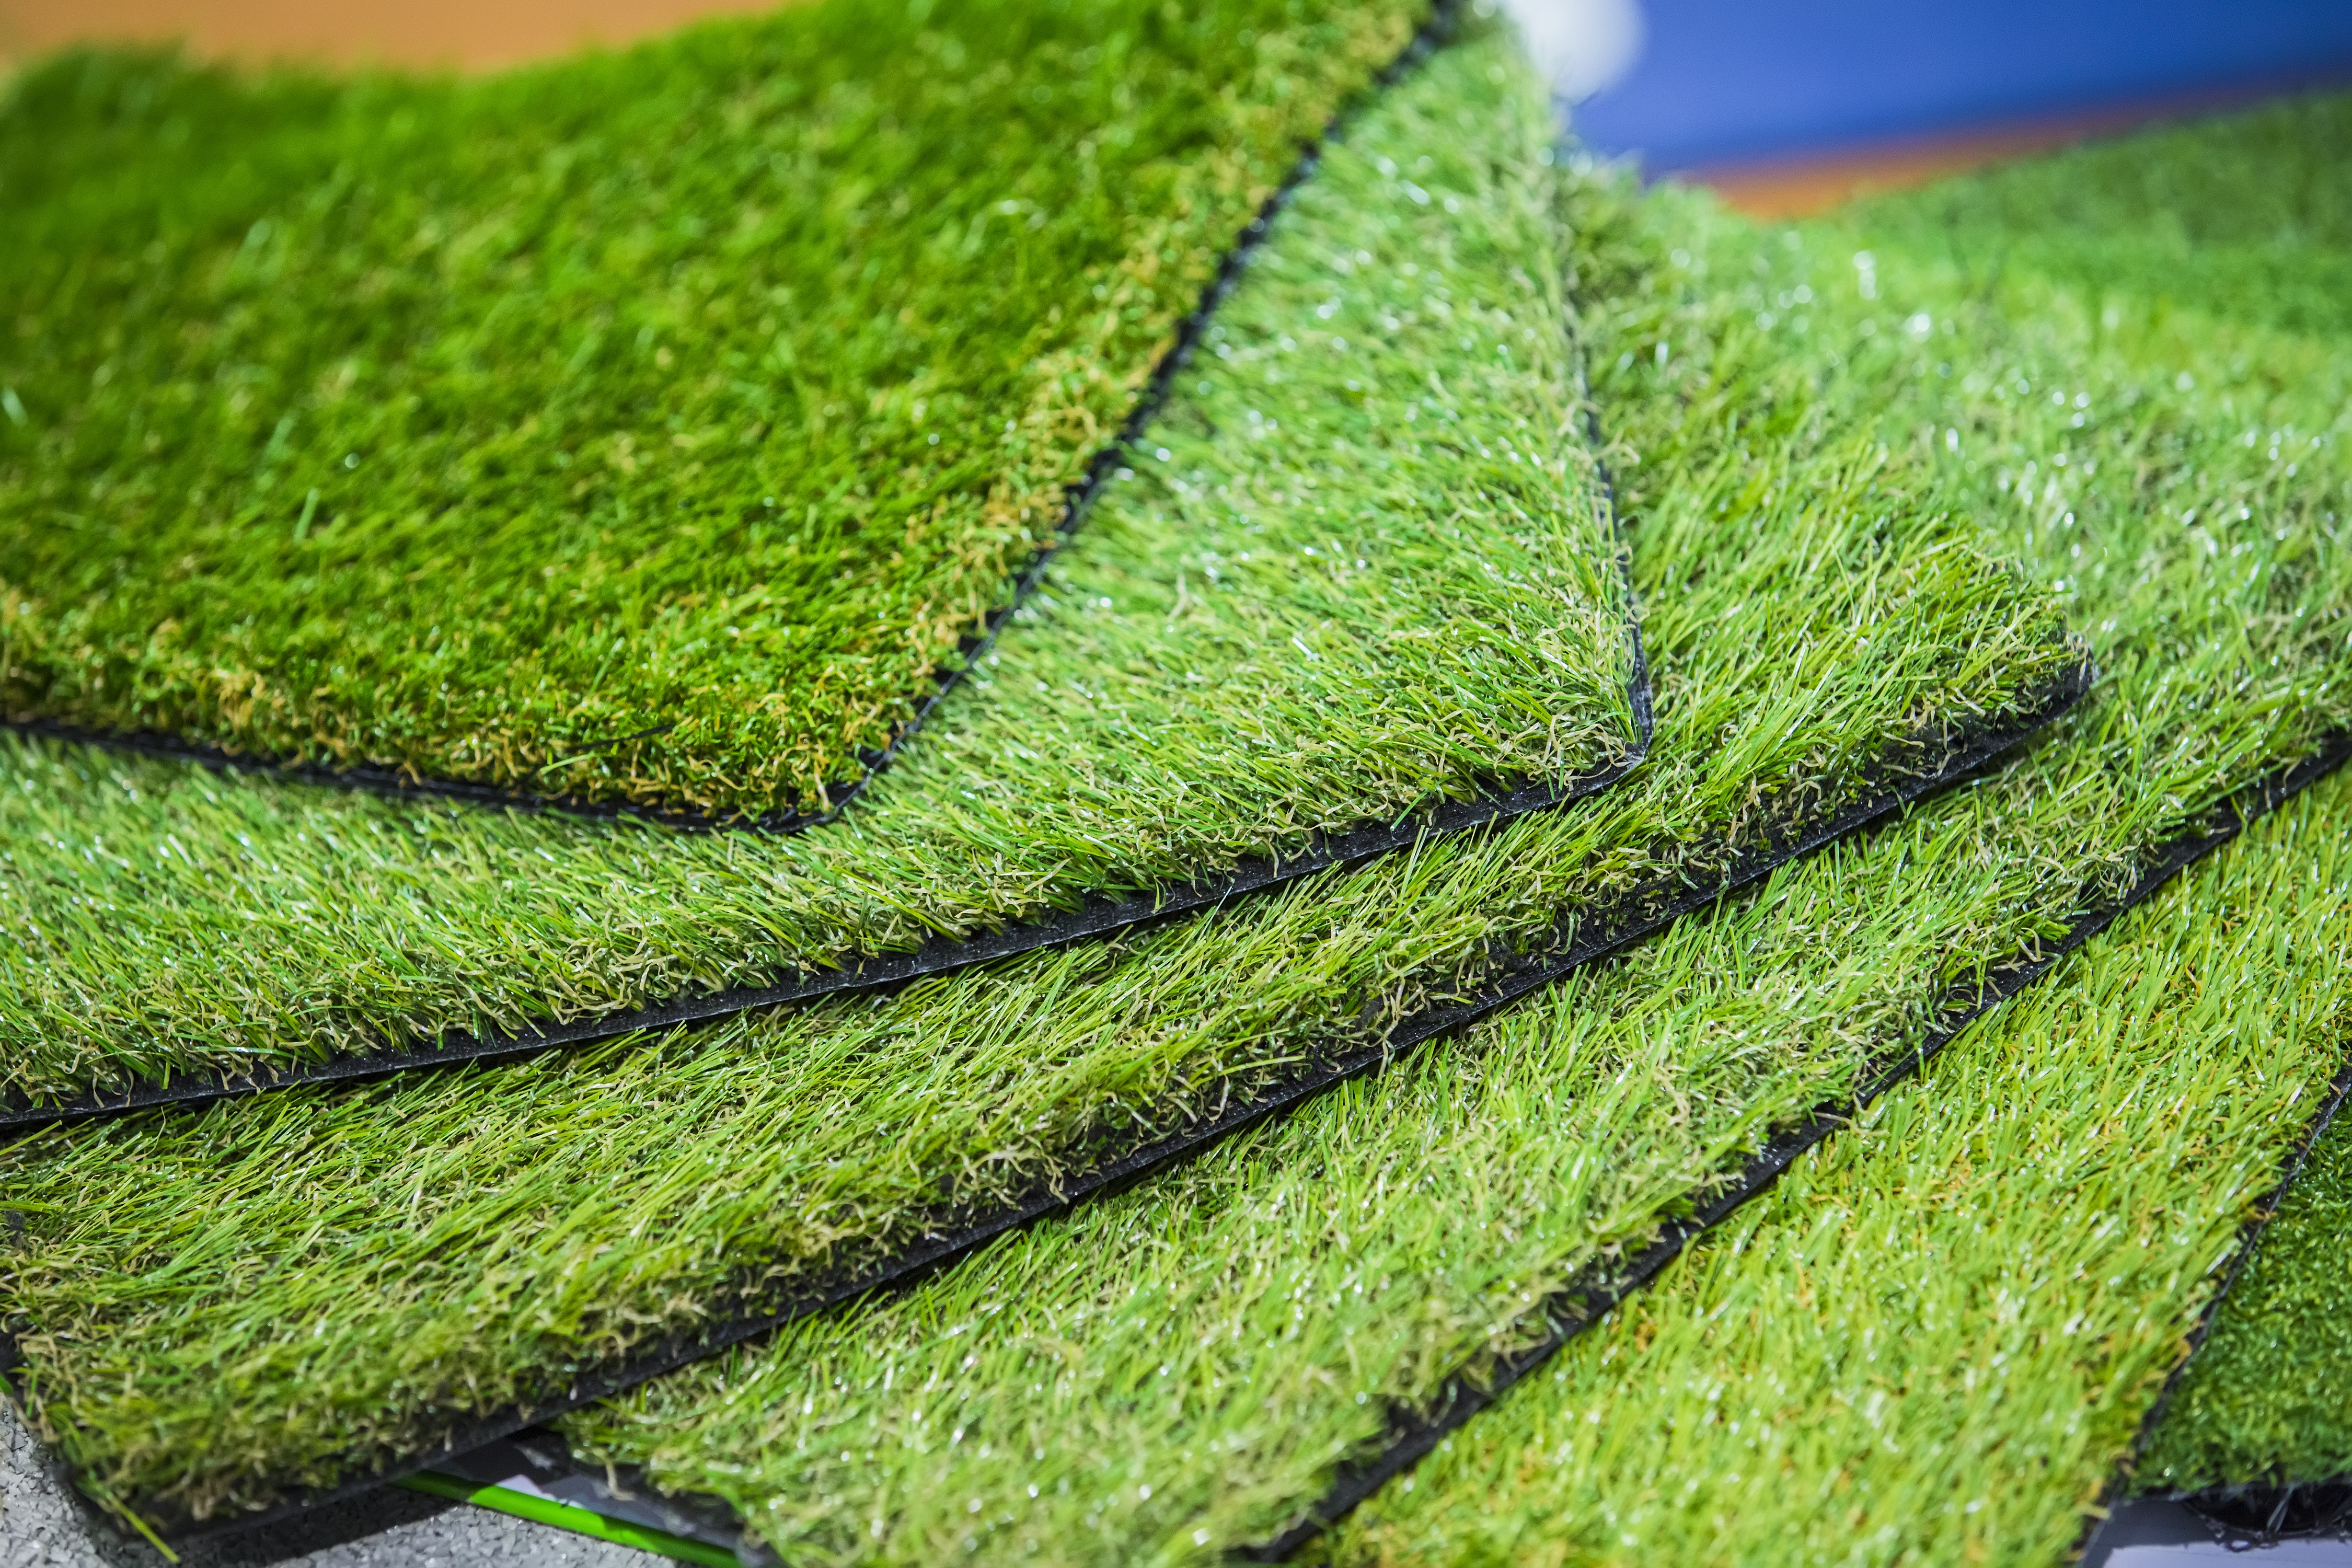 Artificial grass sections